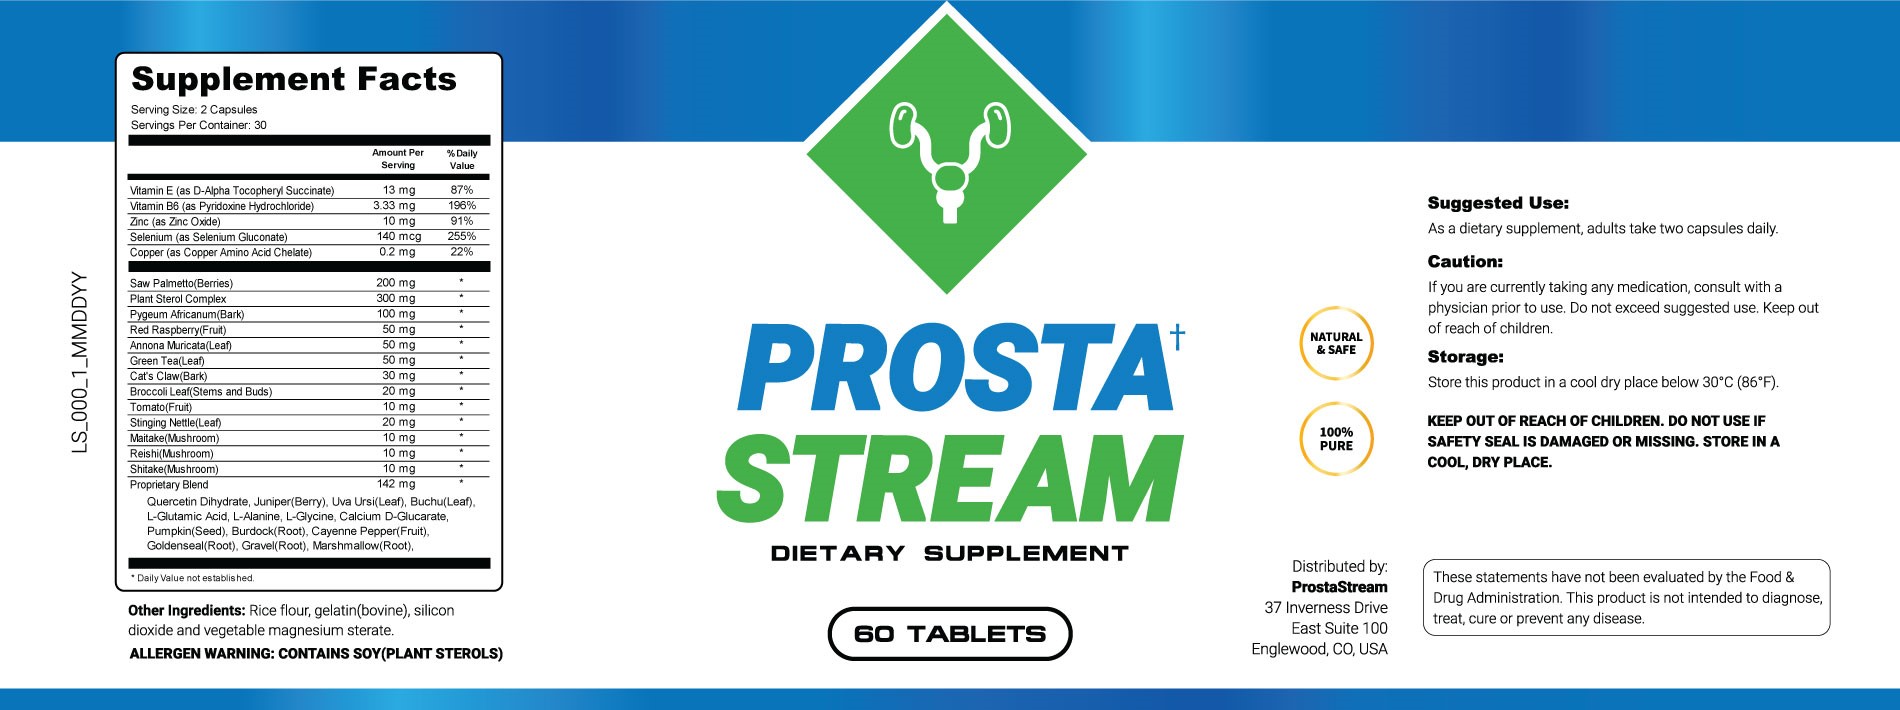 ProstaStream prostate supplement Facts